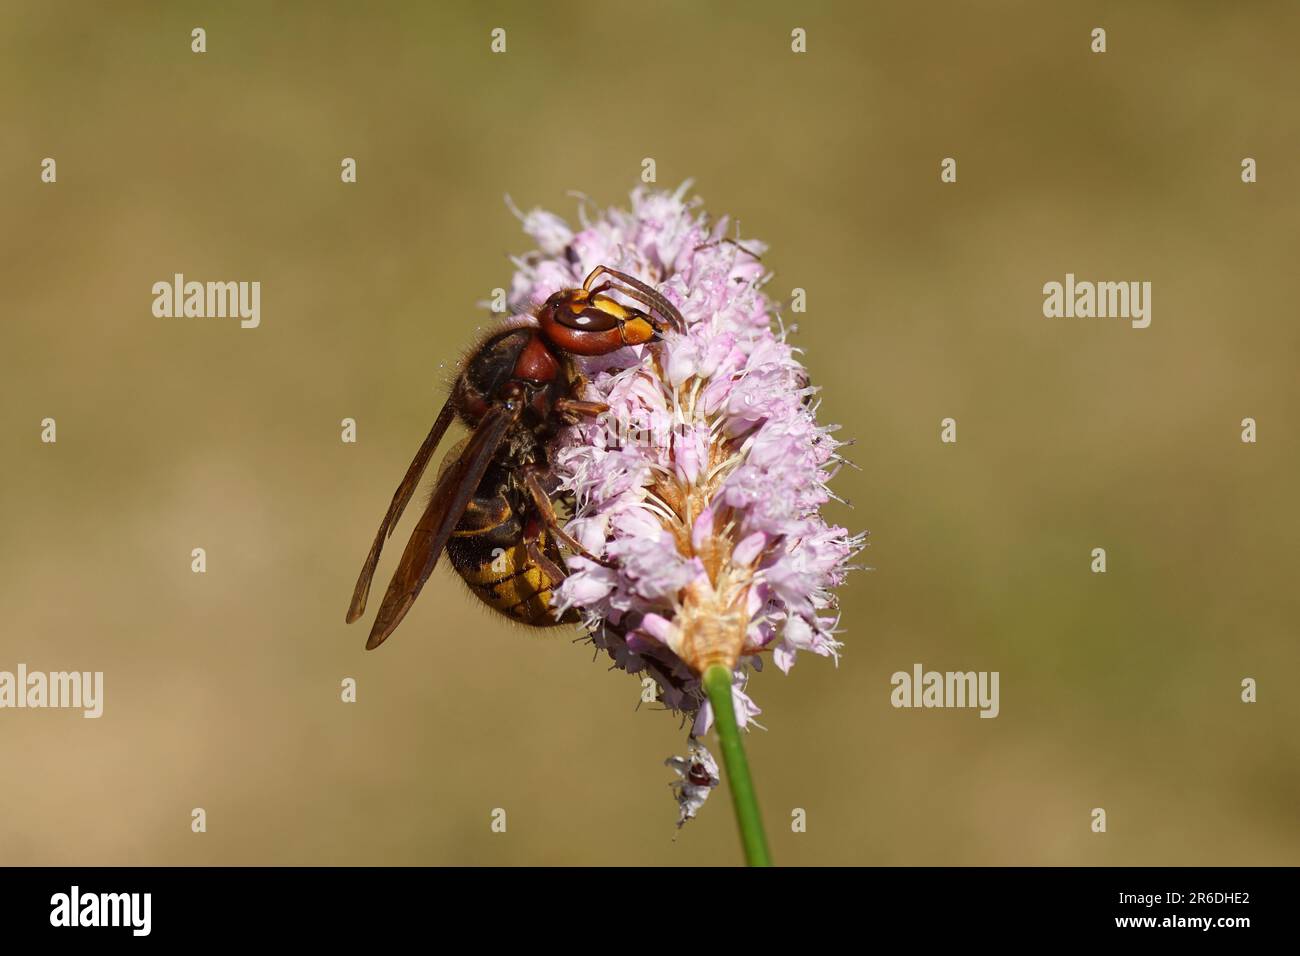 Queen European hornet (Vespa crabro), family Vespidae) on flowers of bistort (Bistorta officinalis, synonym Persicaria bistorta), dock family Stock Photo